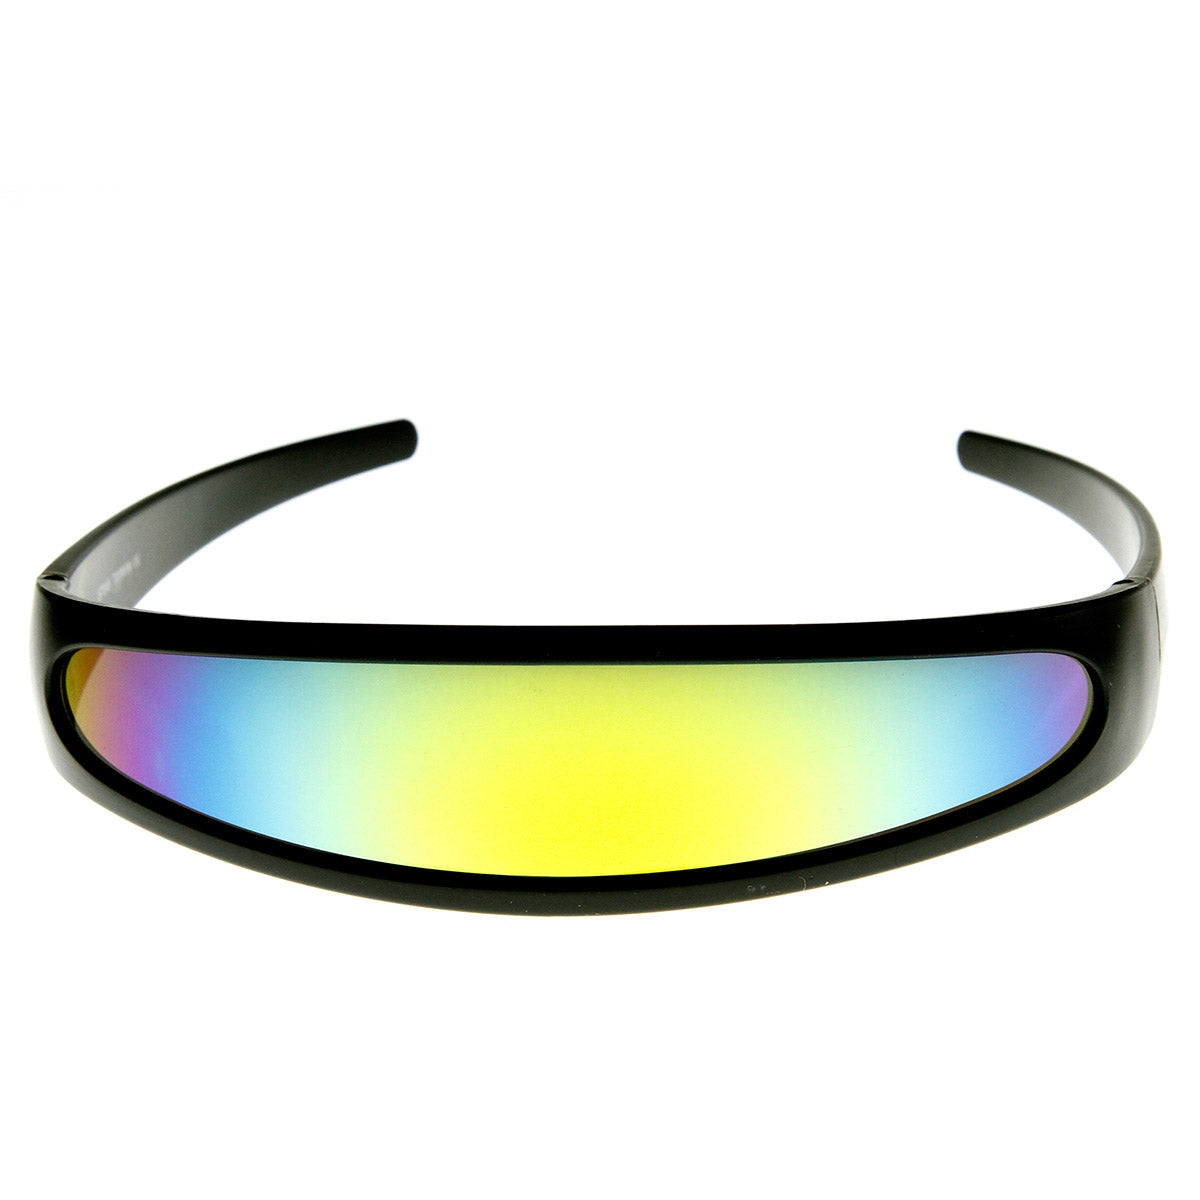 Mirrored Sunglasses for Men  Futuristic Narrow Cyclops Sunglasses